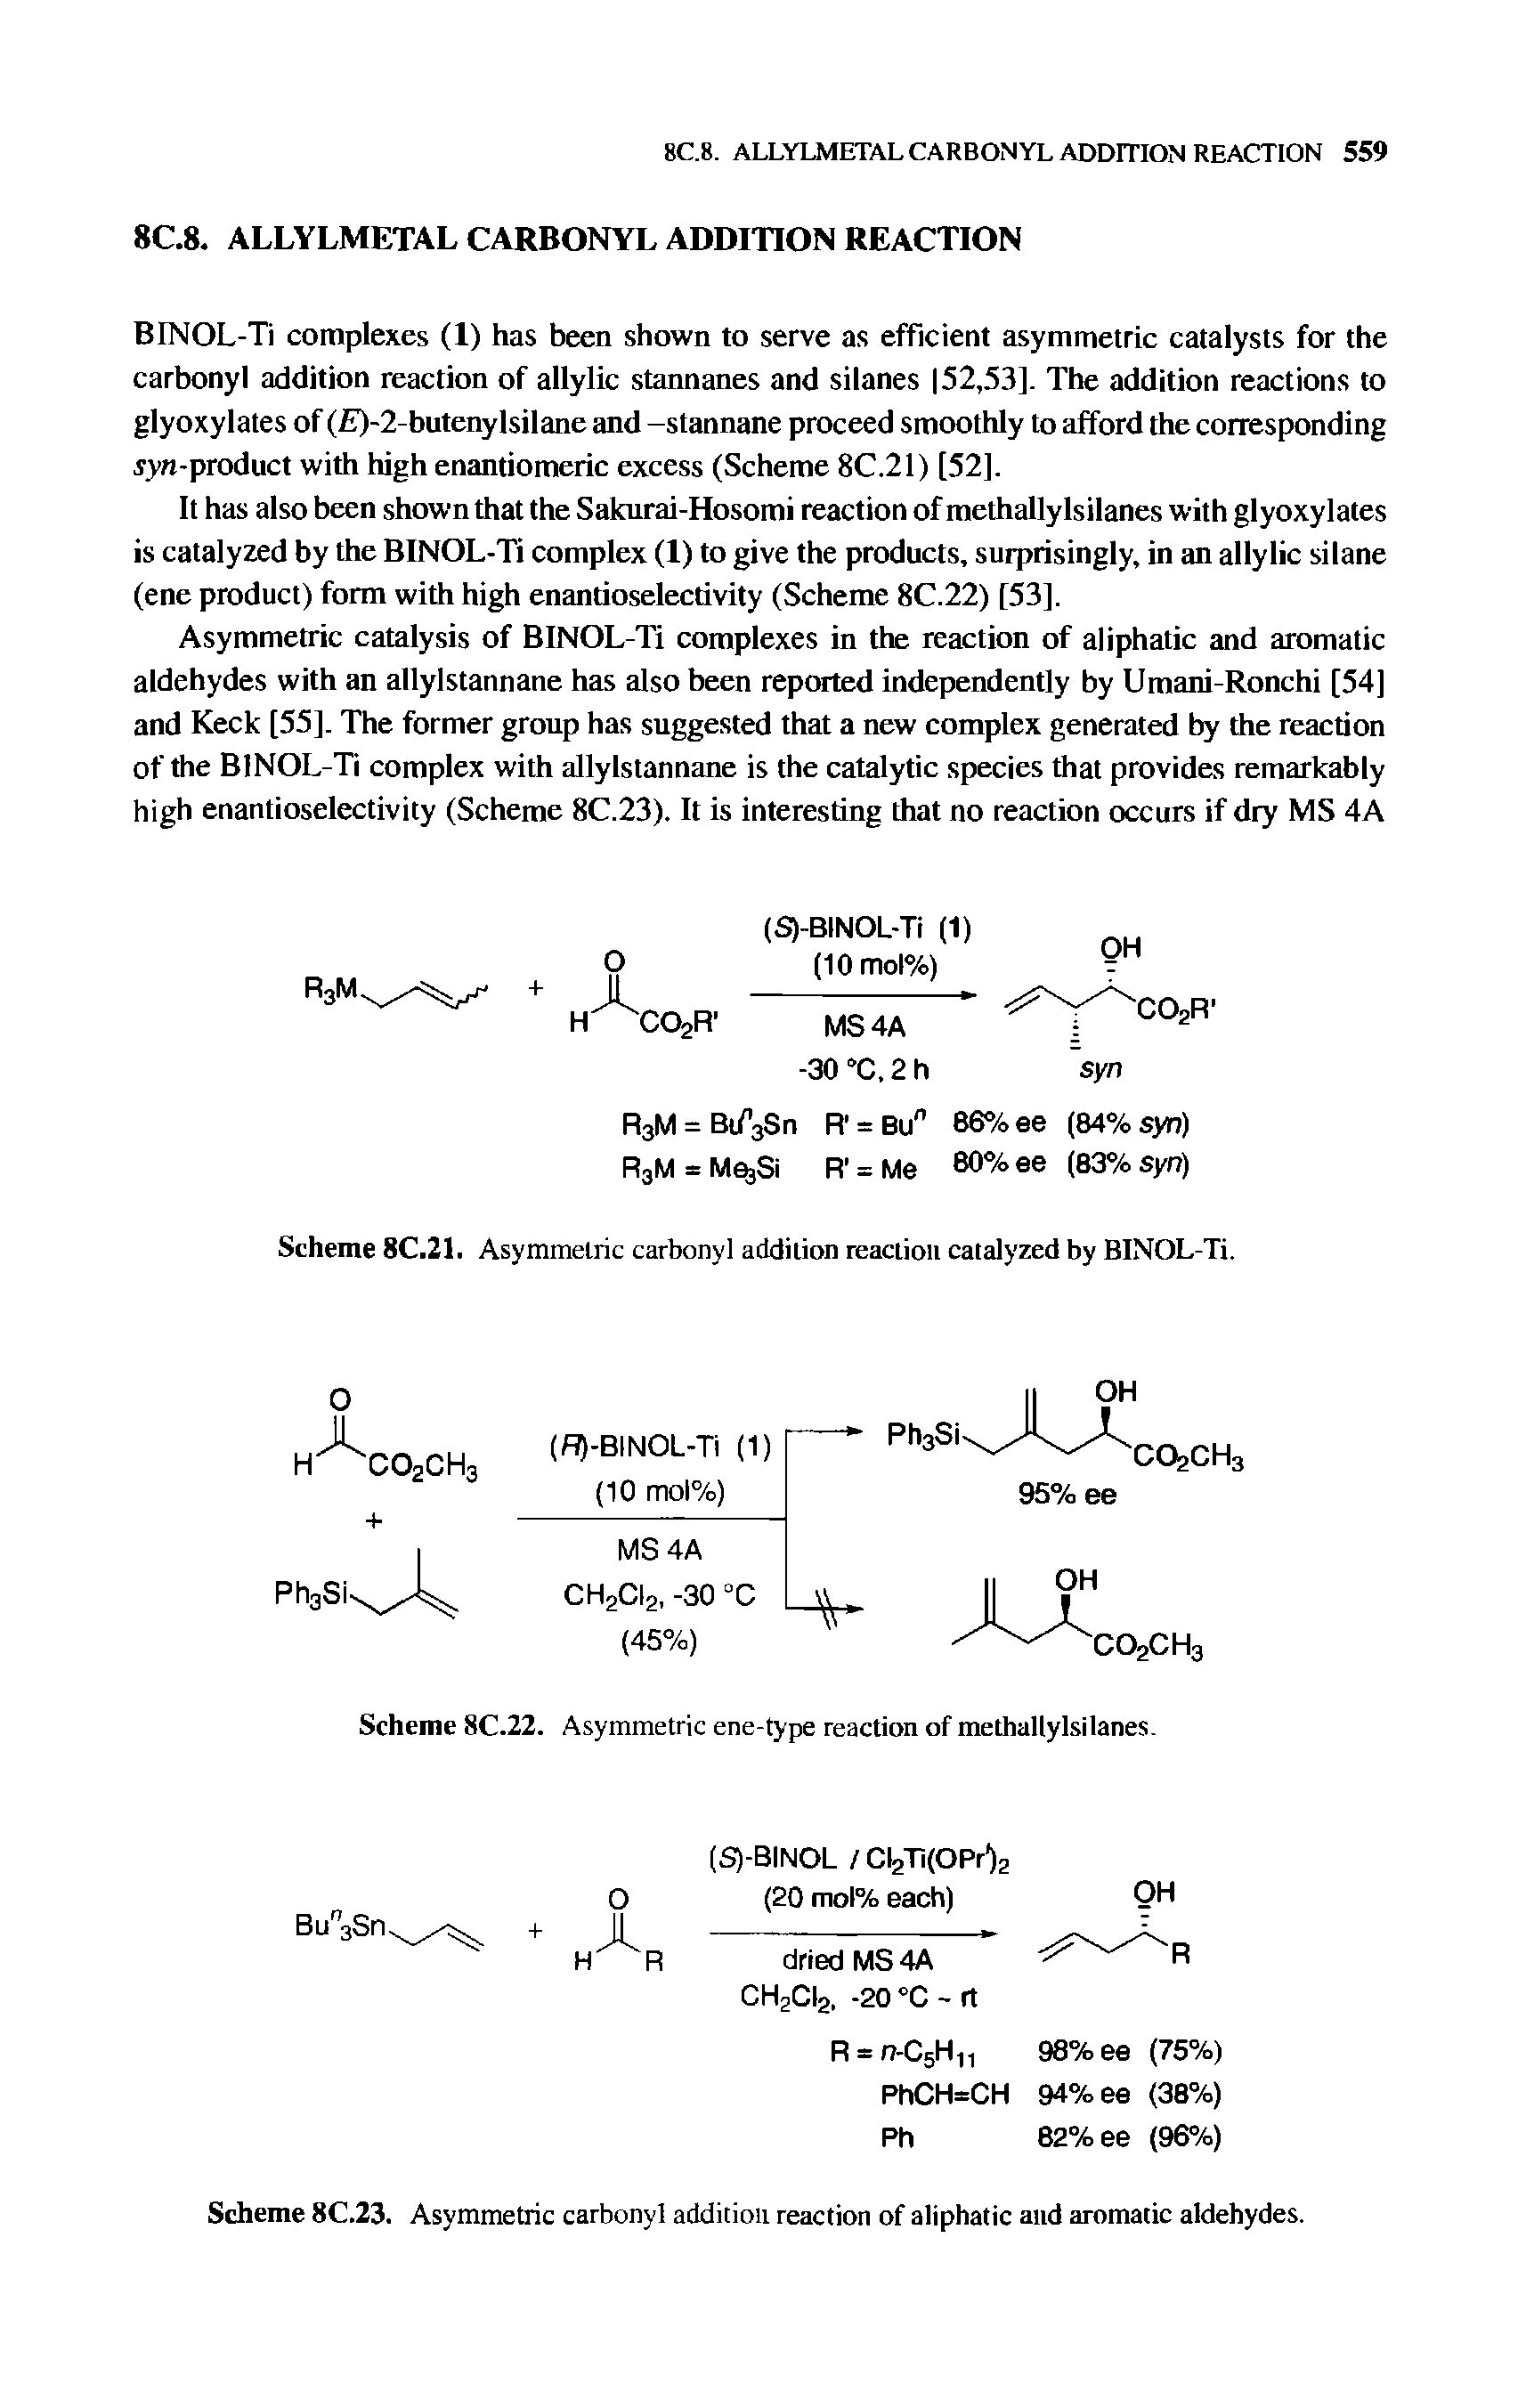 Scheme 8C.21. Asymmetric carbonyl addition reaction catalyzed by BINOL-Ti.